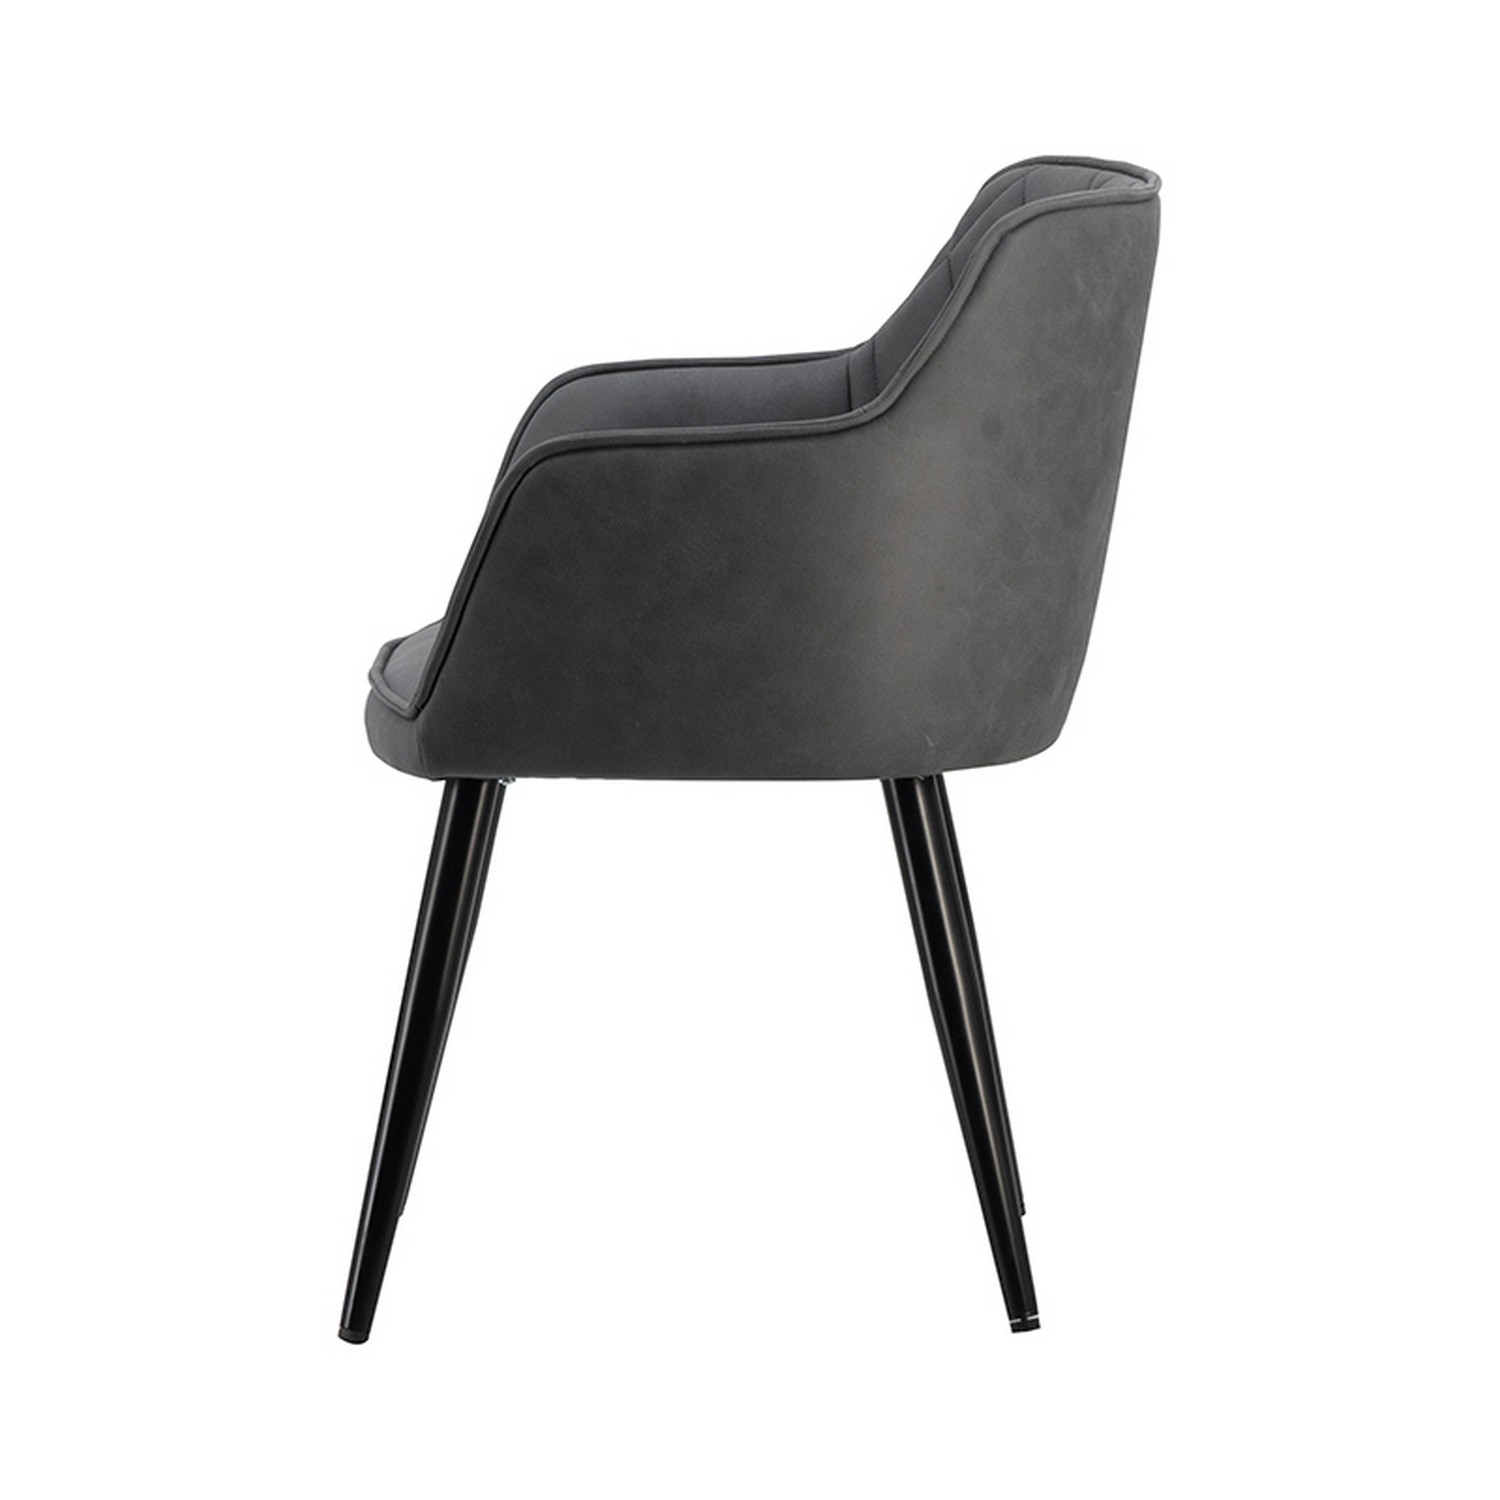 Erin 24 Inch Curved Dining Chair, Gray Fabric, Diamond Pattern Tufting- Saltoro Sherpi